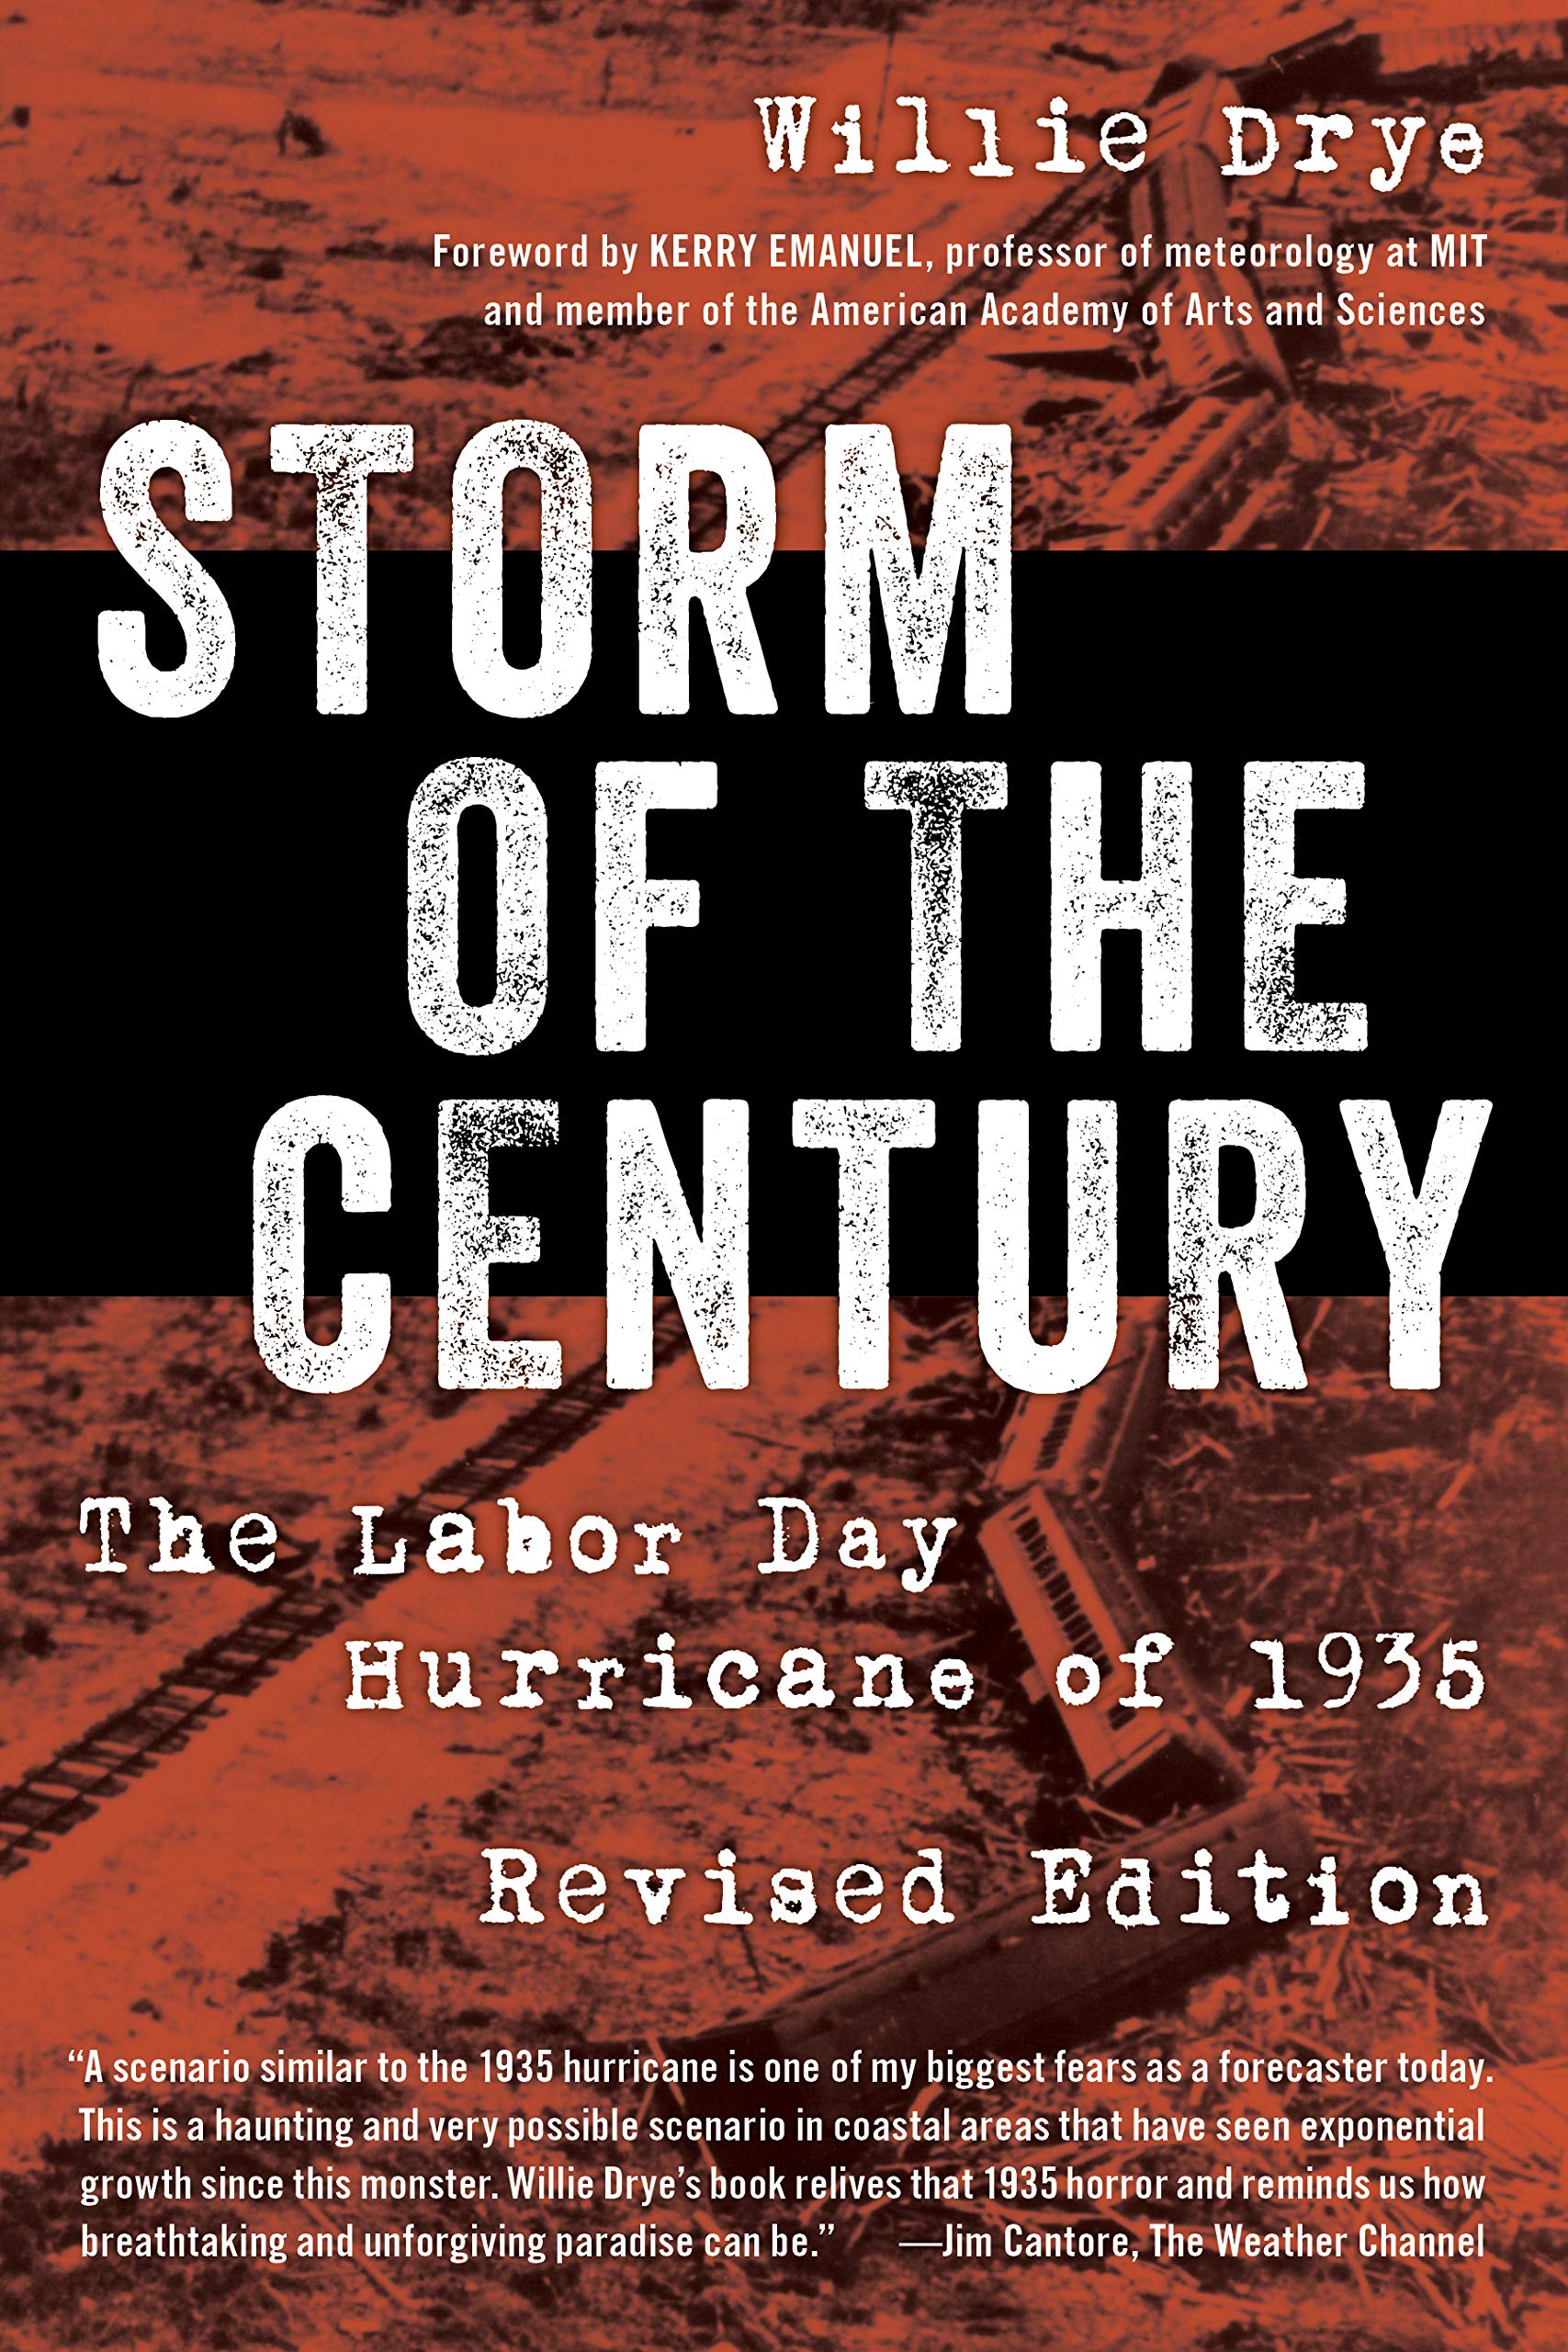 Storm of the century